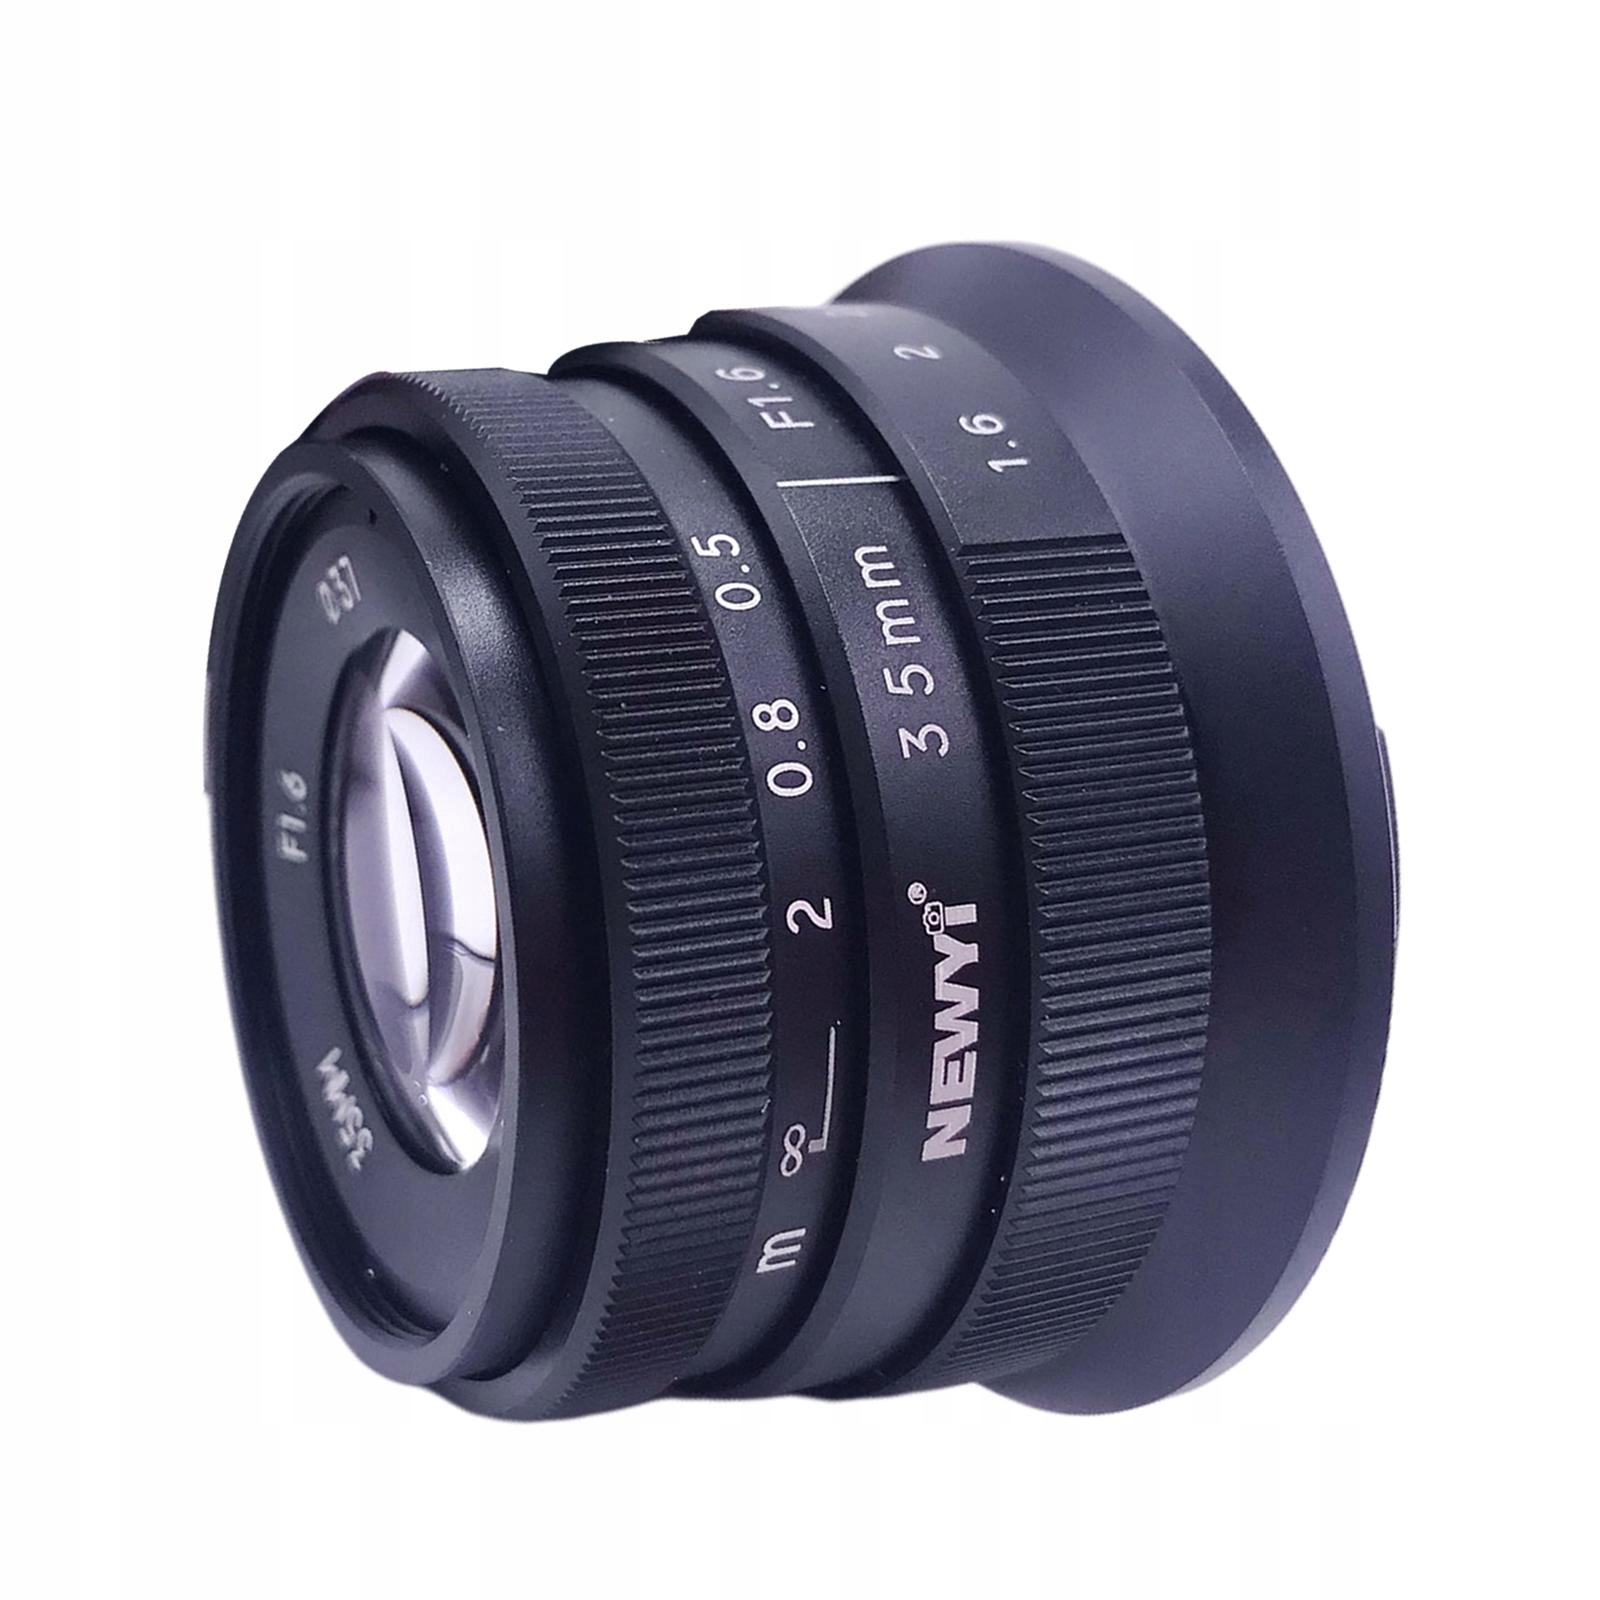 35mm f/1.6 APSC Camera Lens for Sony A6300 A6000 A5100 KNATC A7II A7R